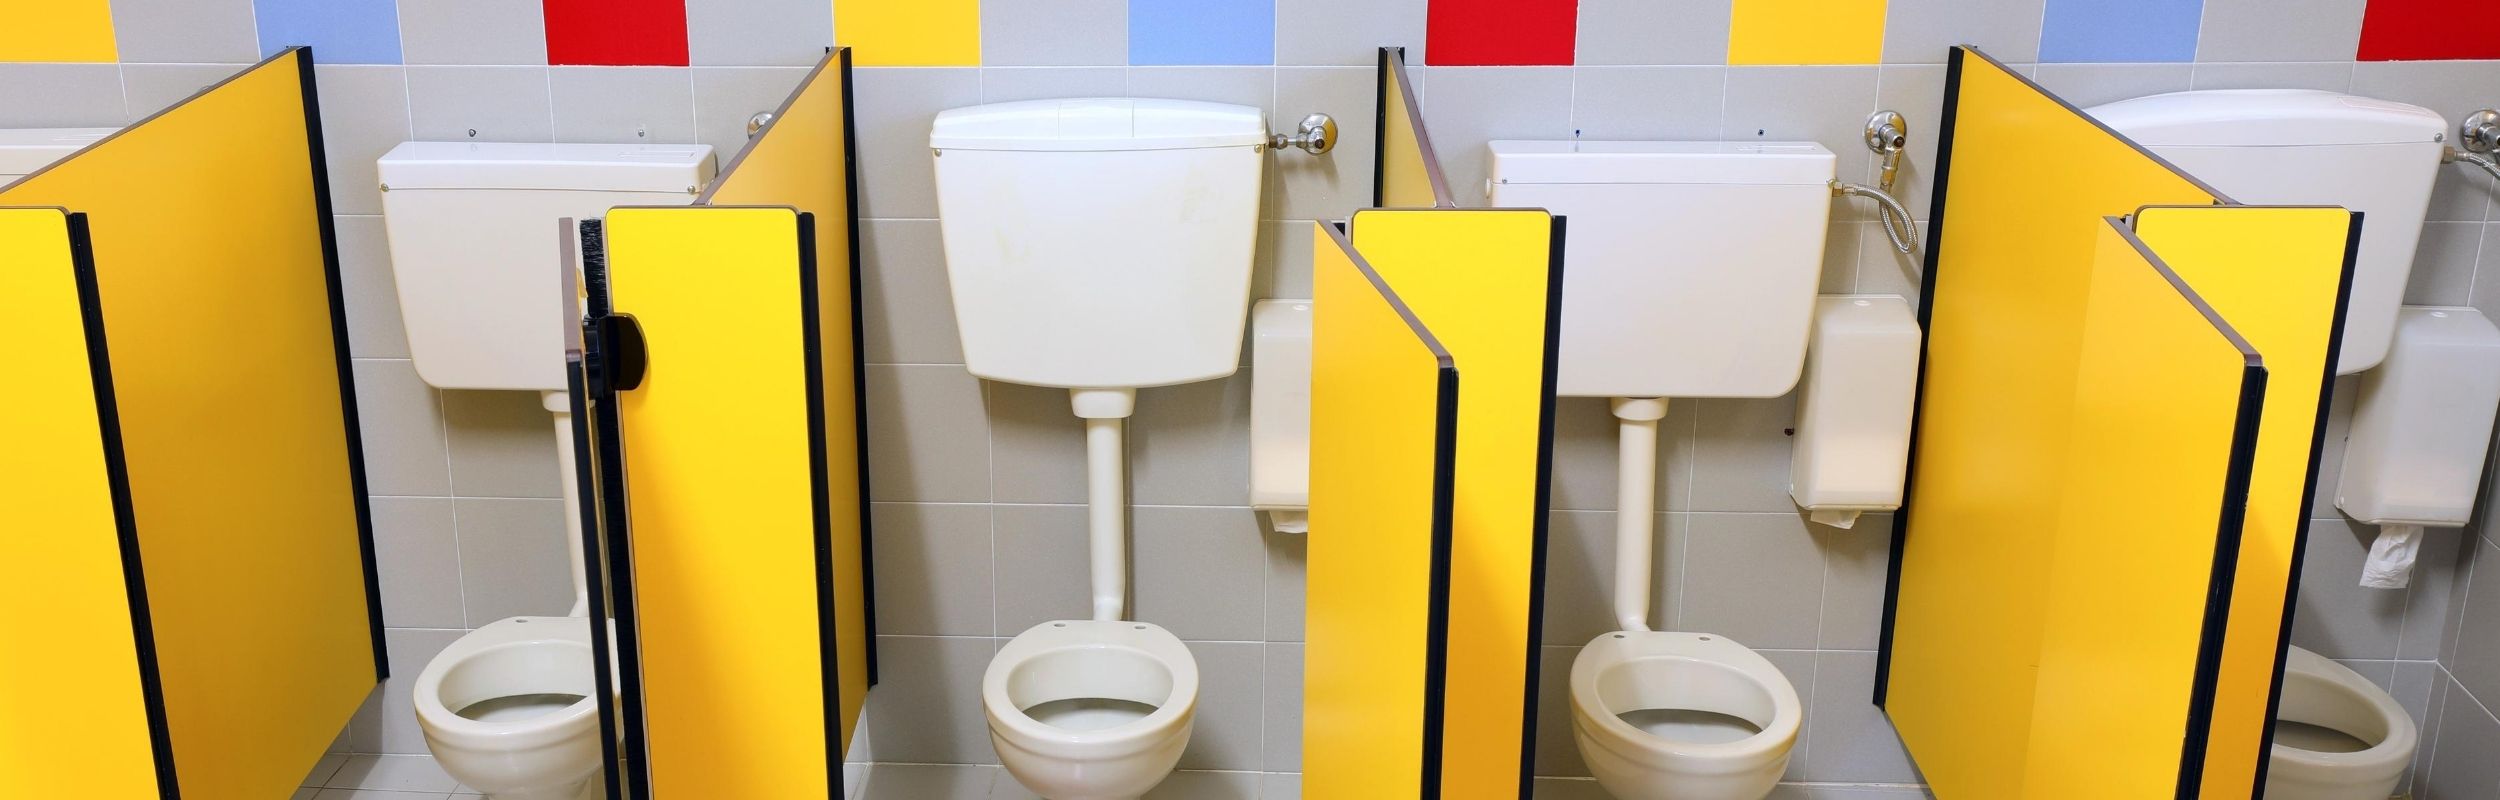 school toilets